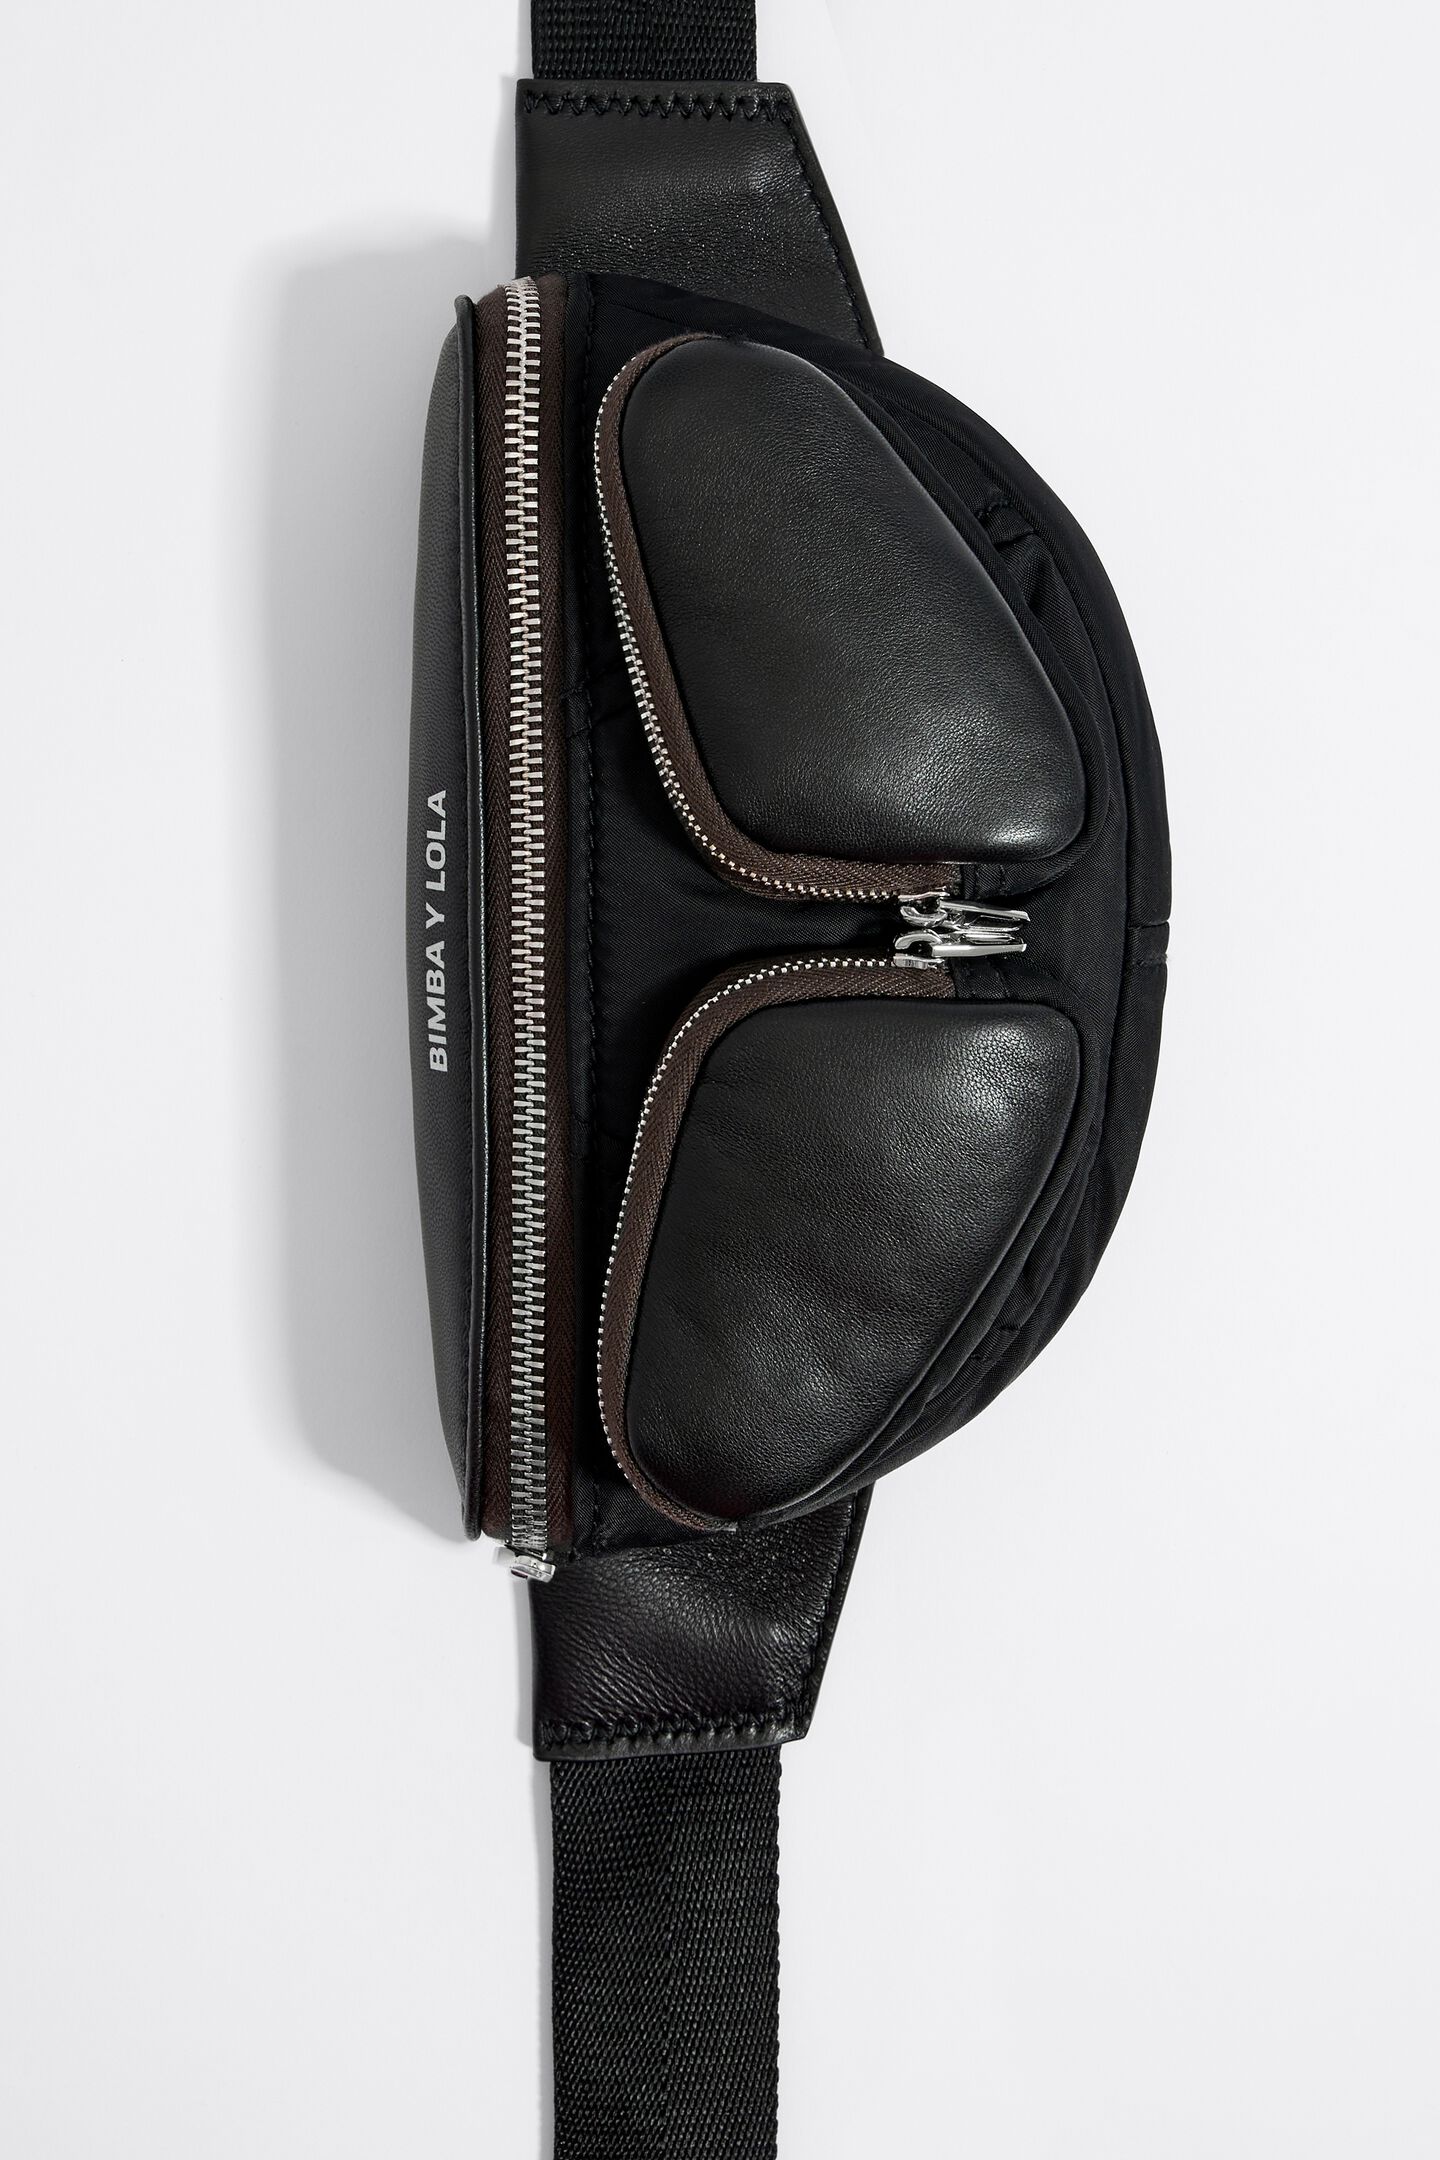 XS black leather Pocket bumbag